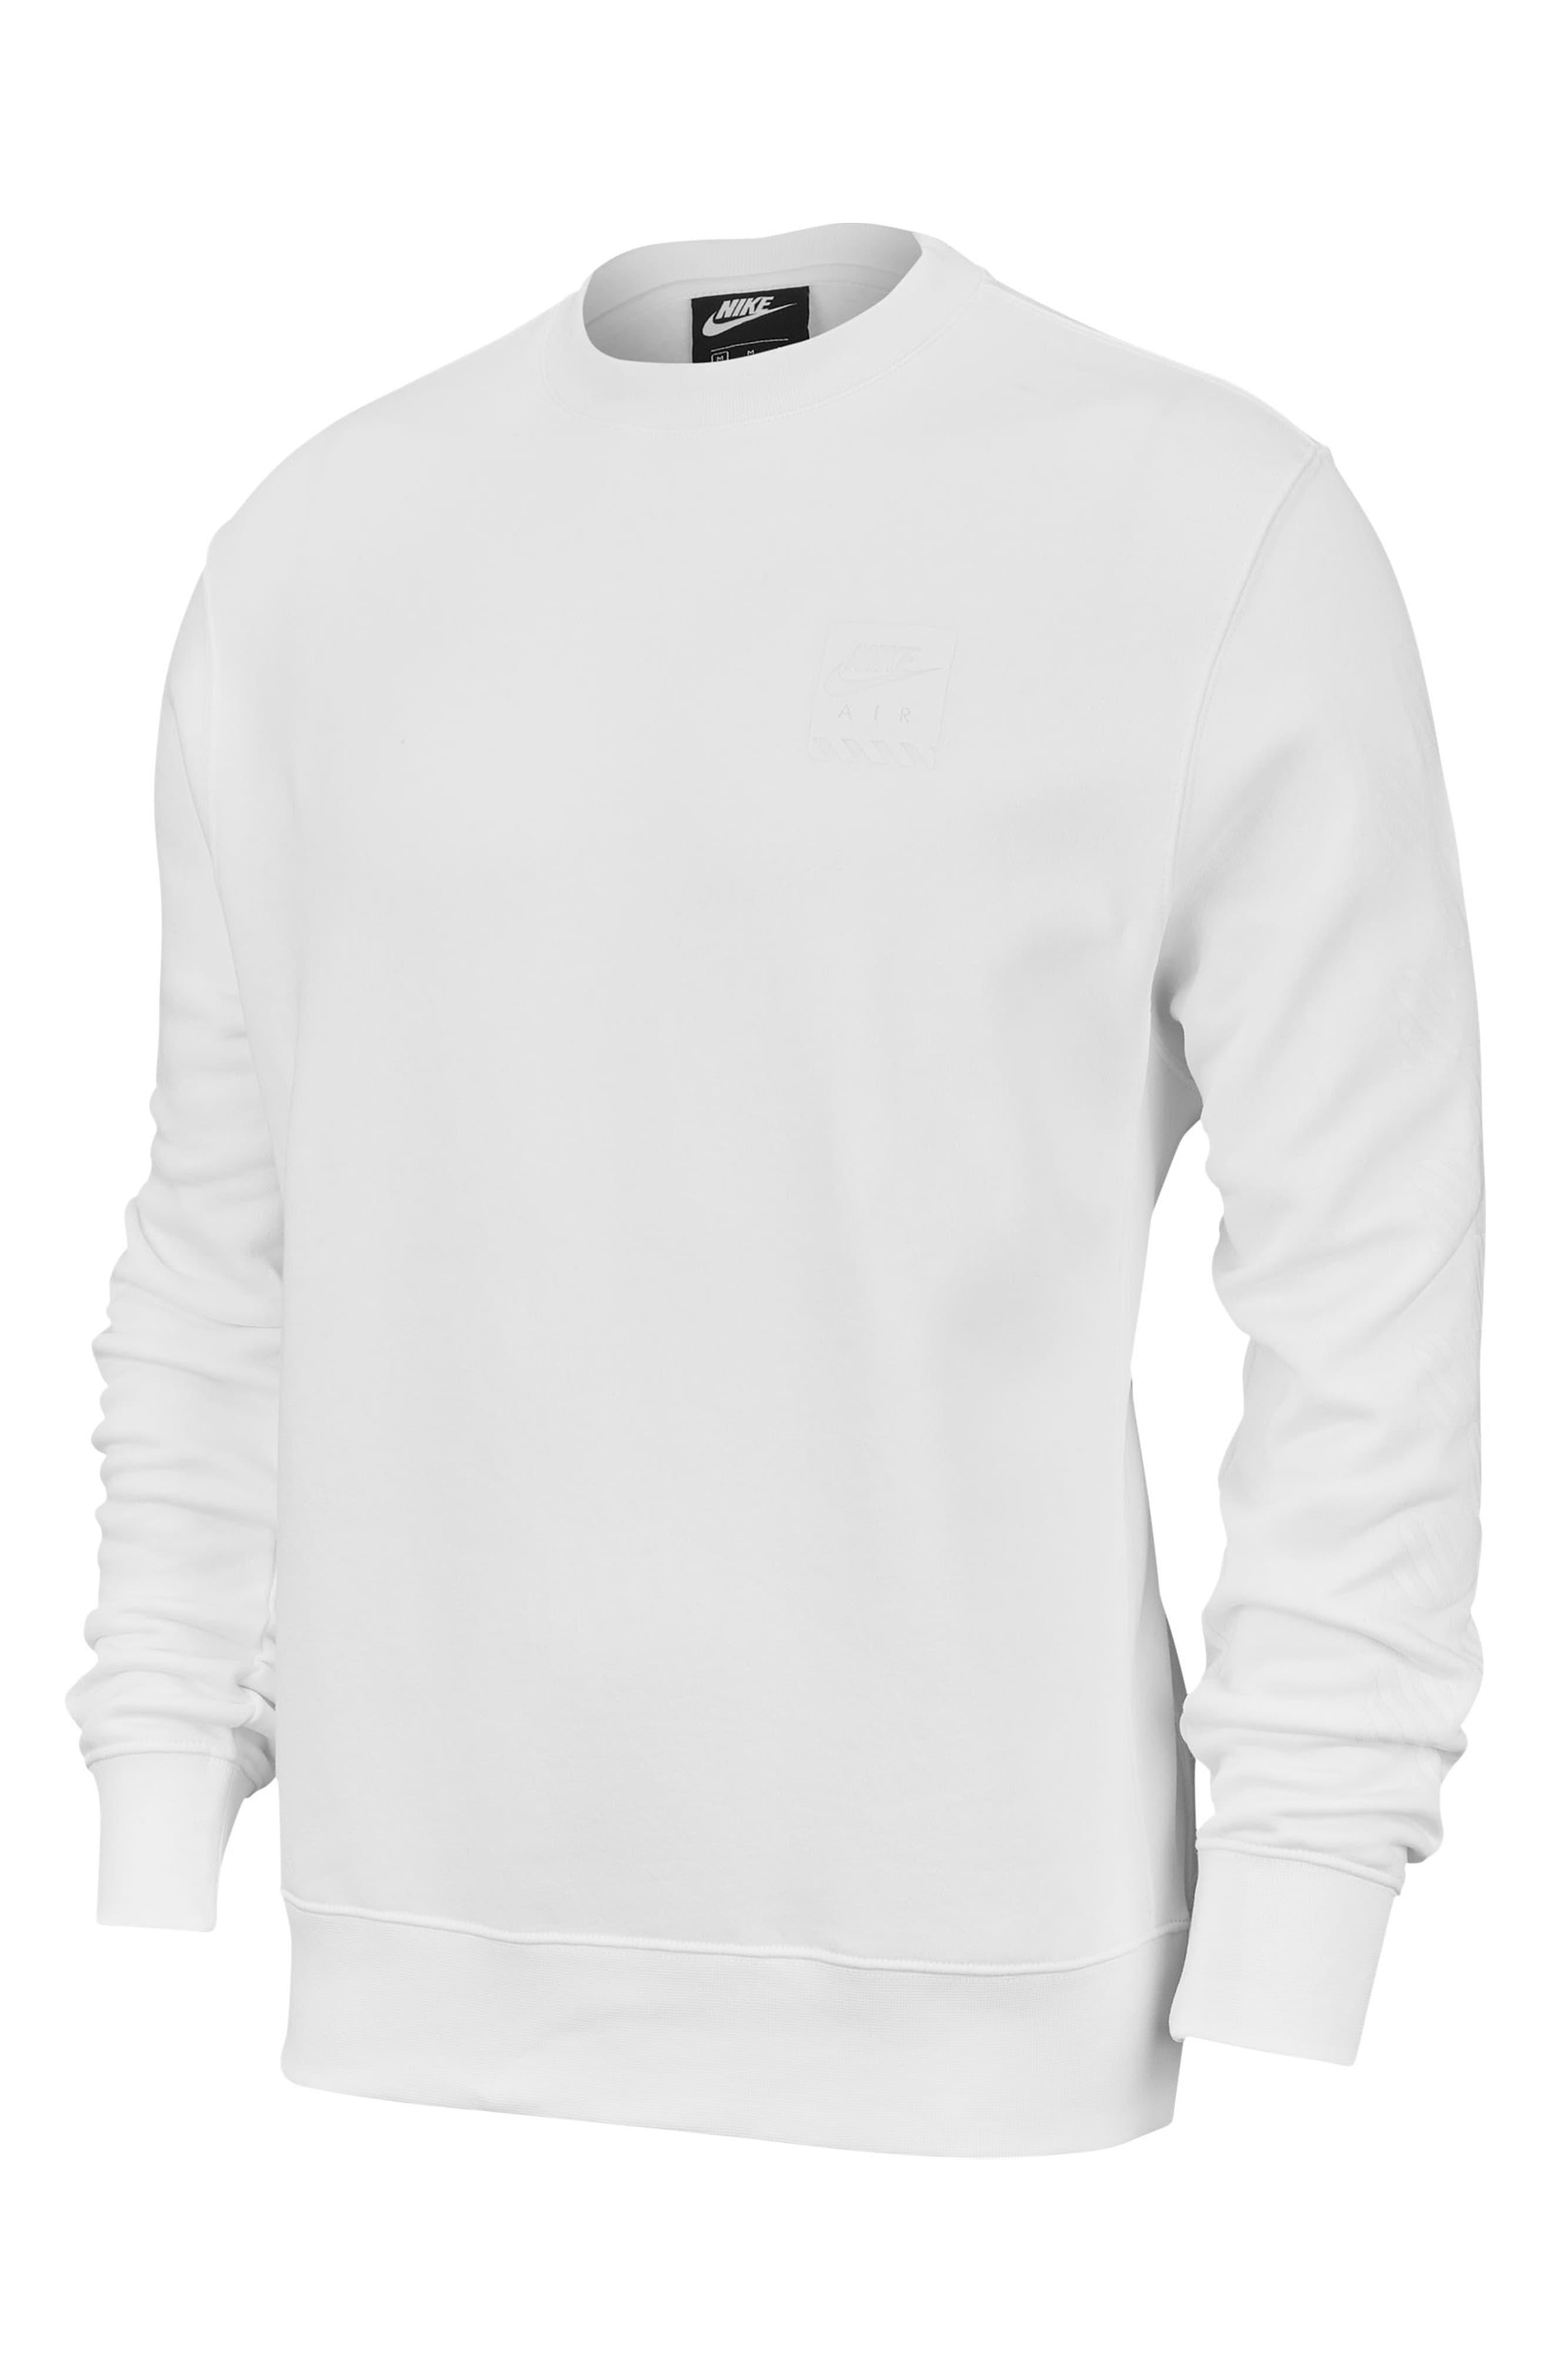 nike crewneck sweatshirt white